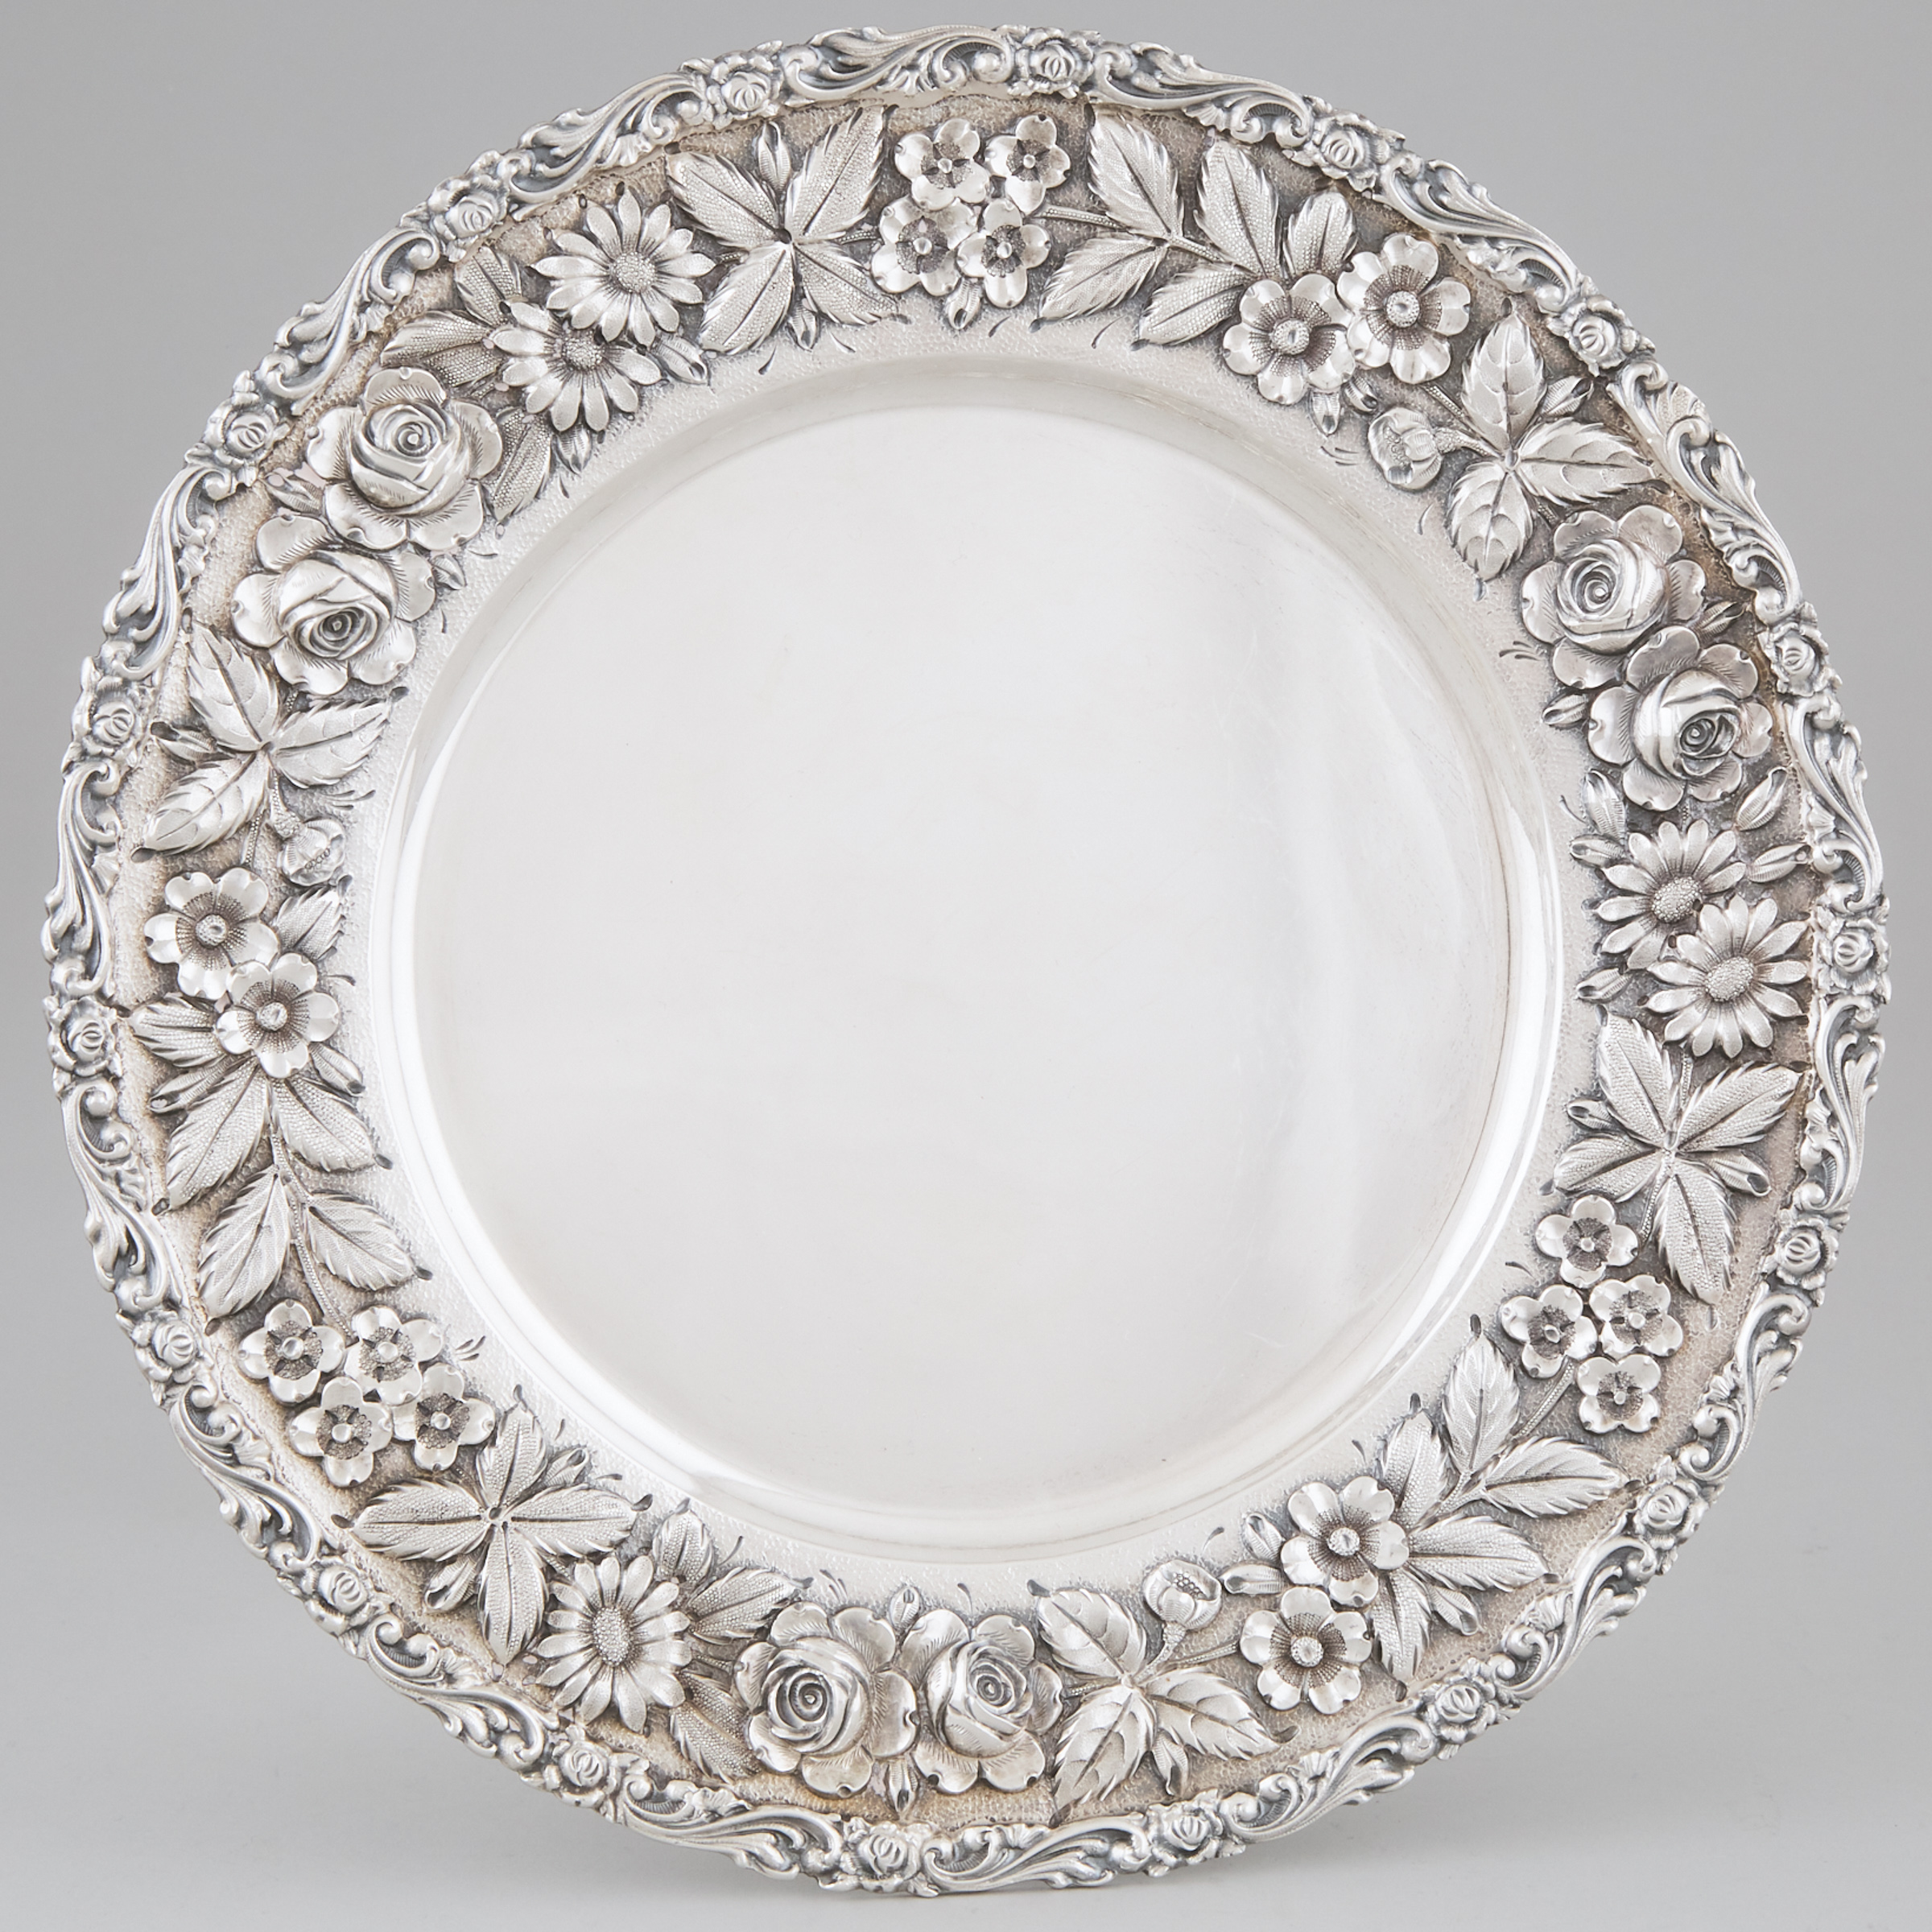 American Silver 'Baltimore Rose' Repoussé Plate, Frank Schofield, Baltimore Silversmiths Mfg. Co., Baltimore, Md, c.1903-05